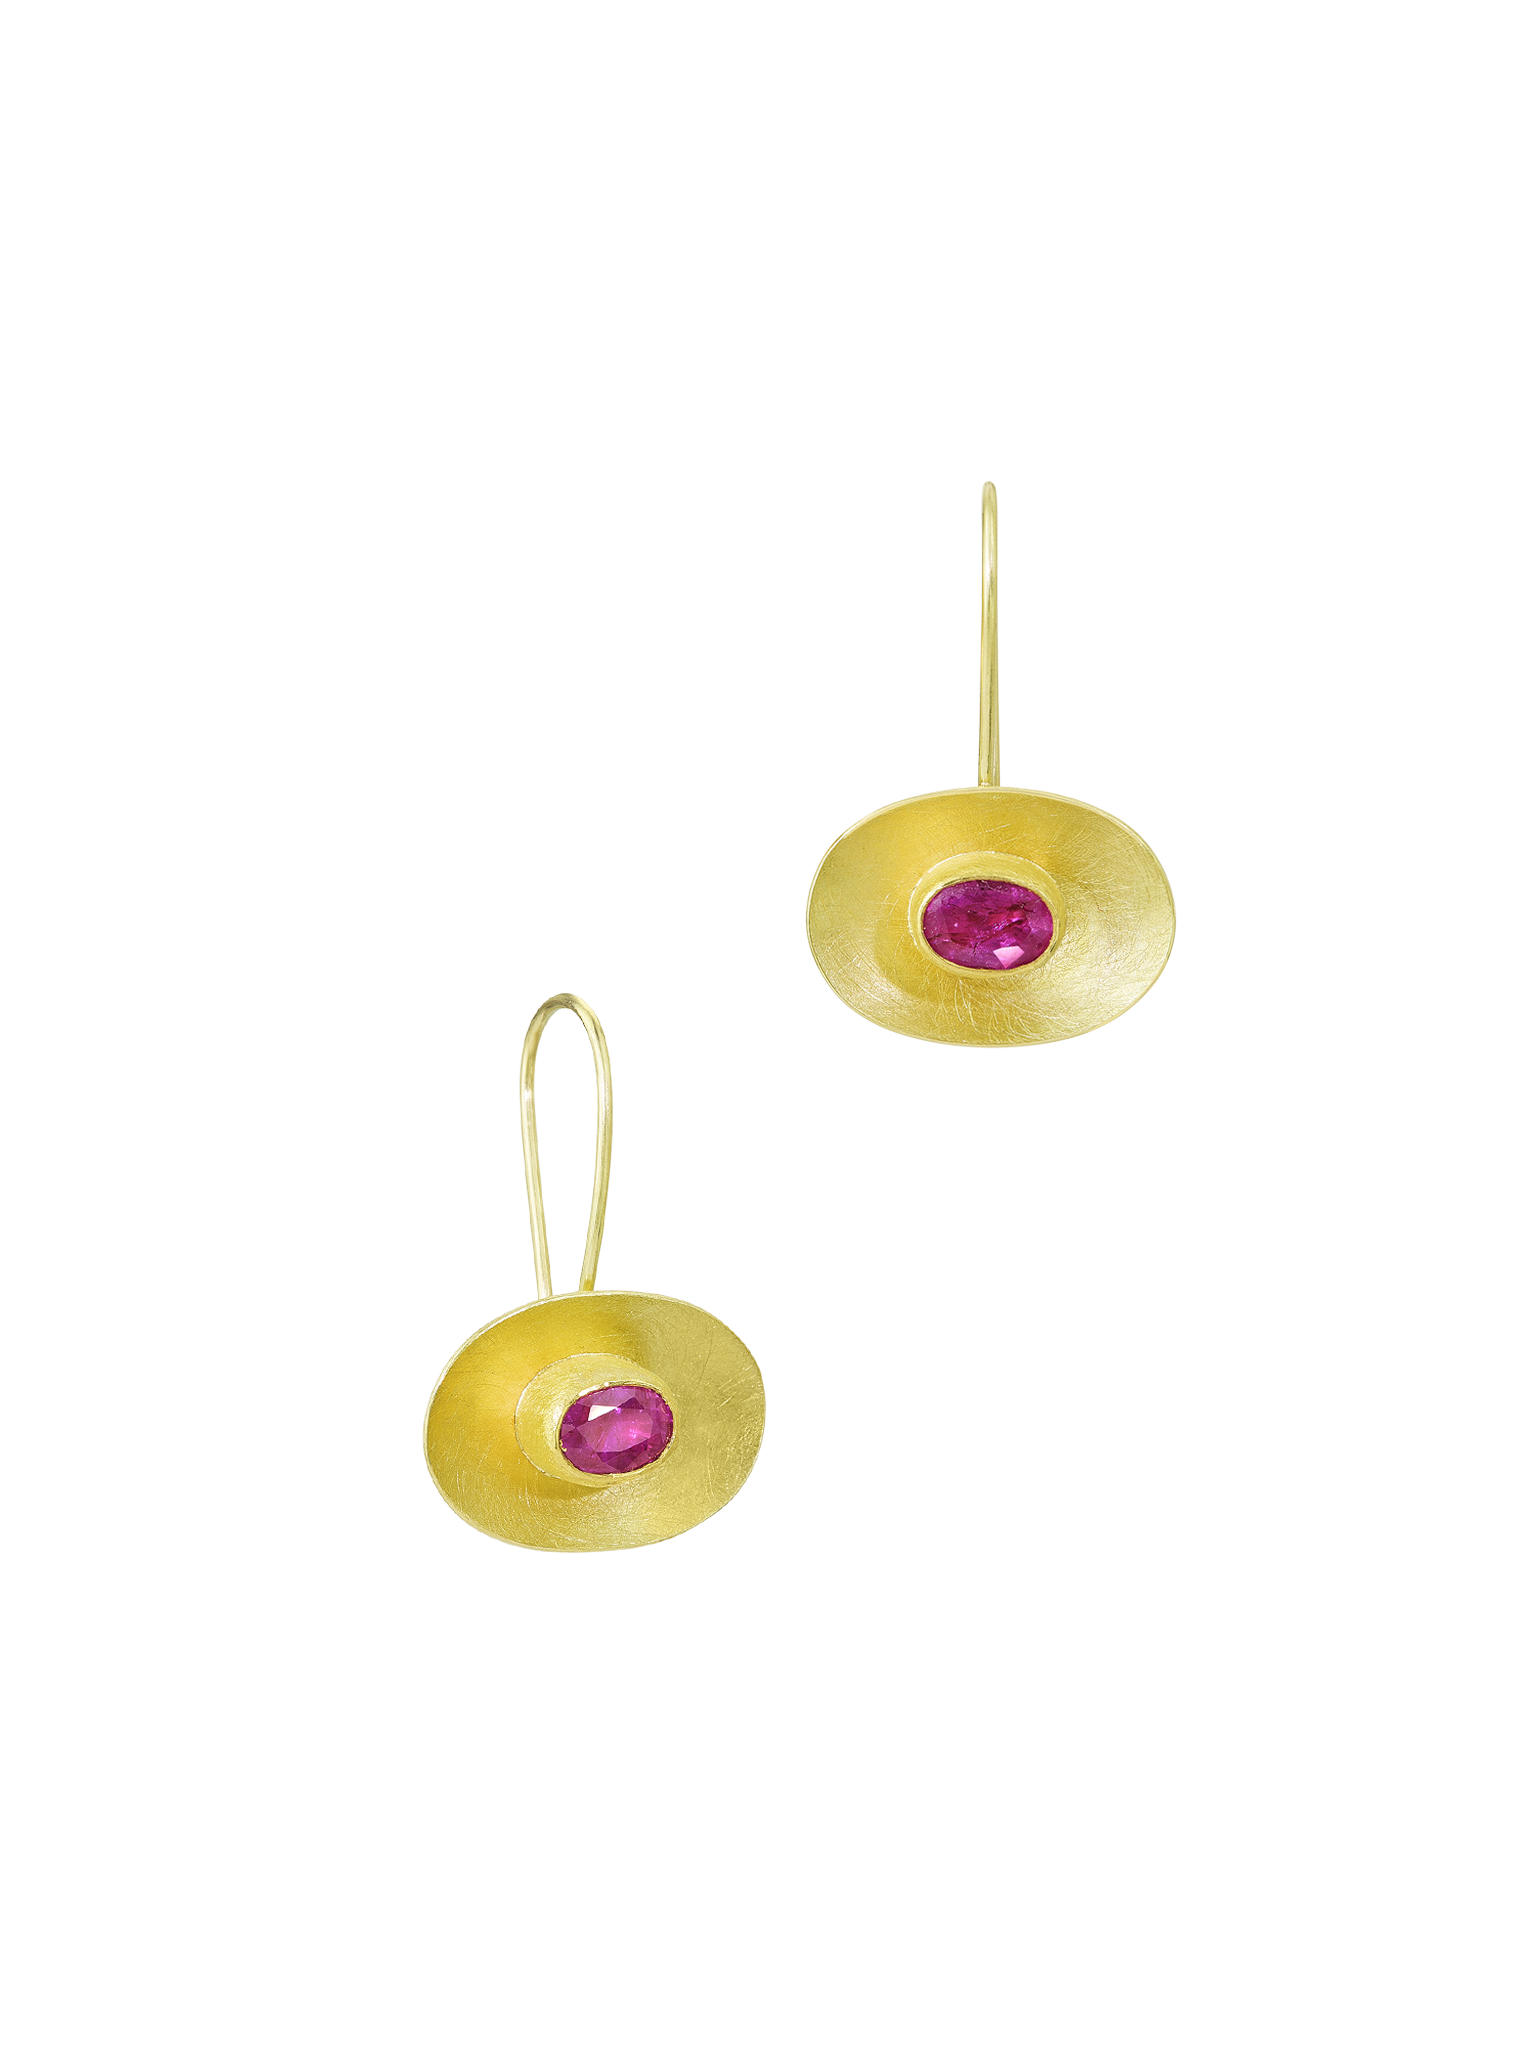 Ruby bowl earrings